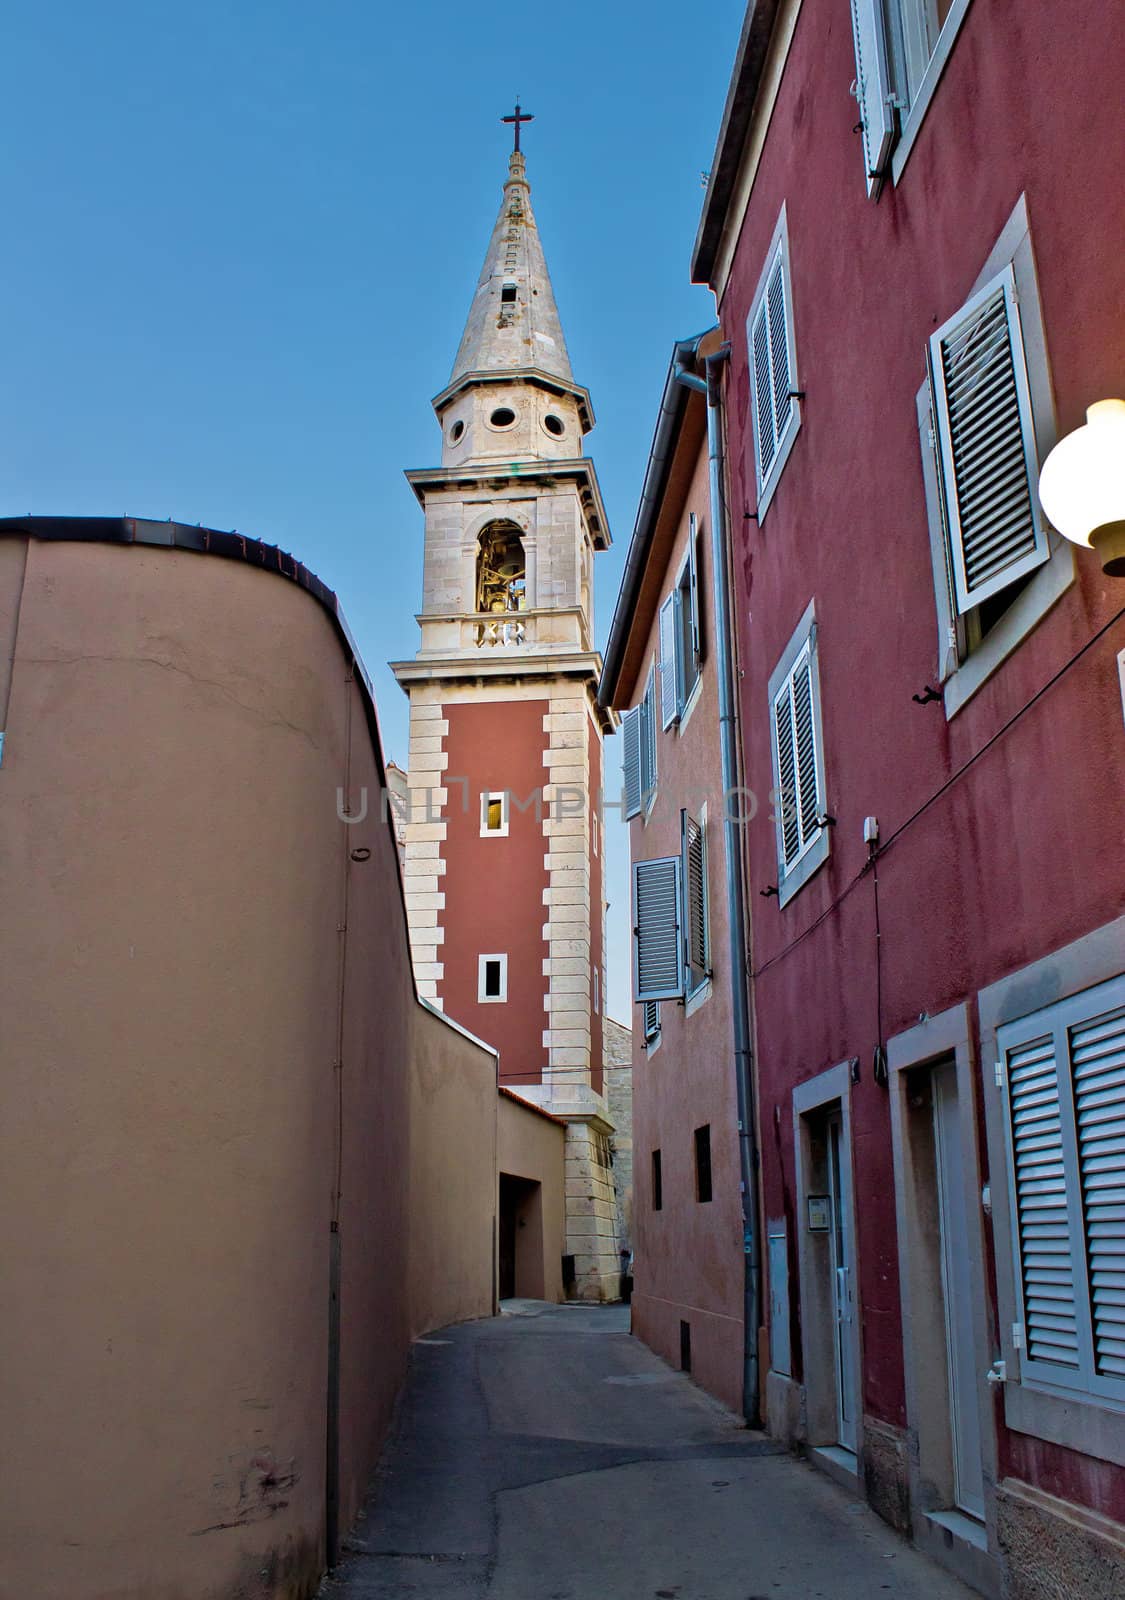 Old narrow street with church tower in Zadar, Dalmatia, Croatia